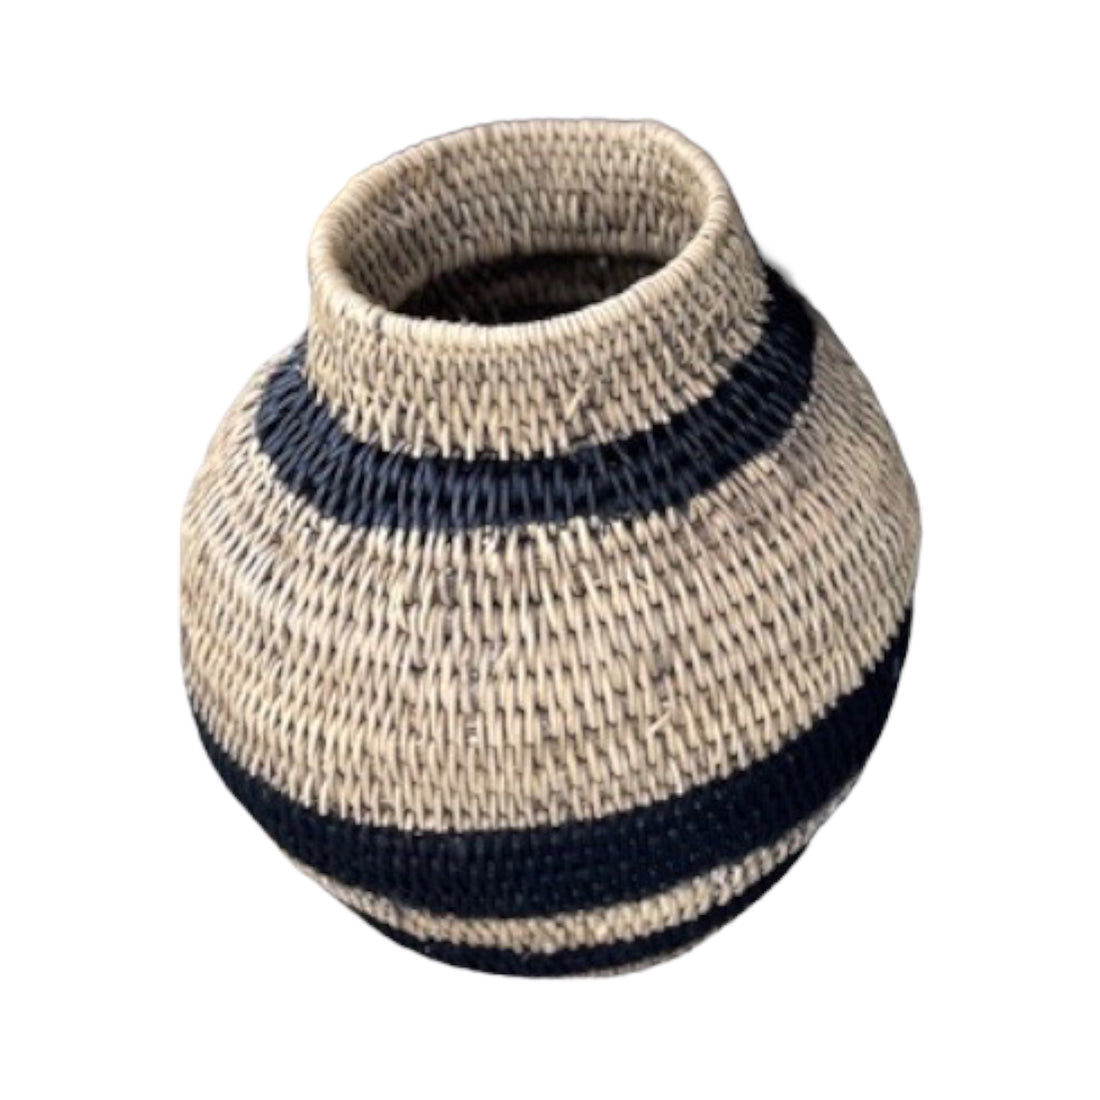 Buhera Baskets - Black Stripe - eyahomeliving